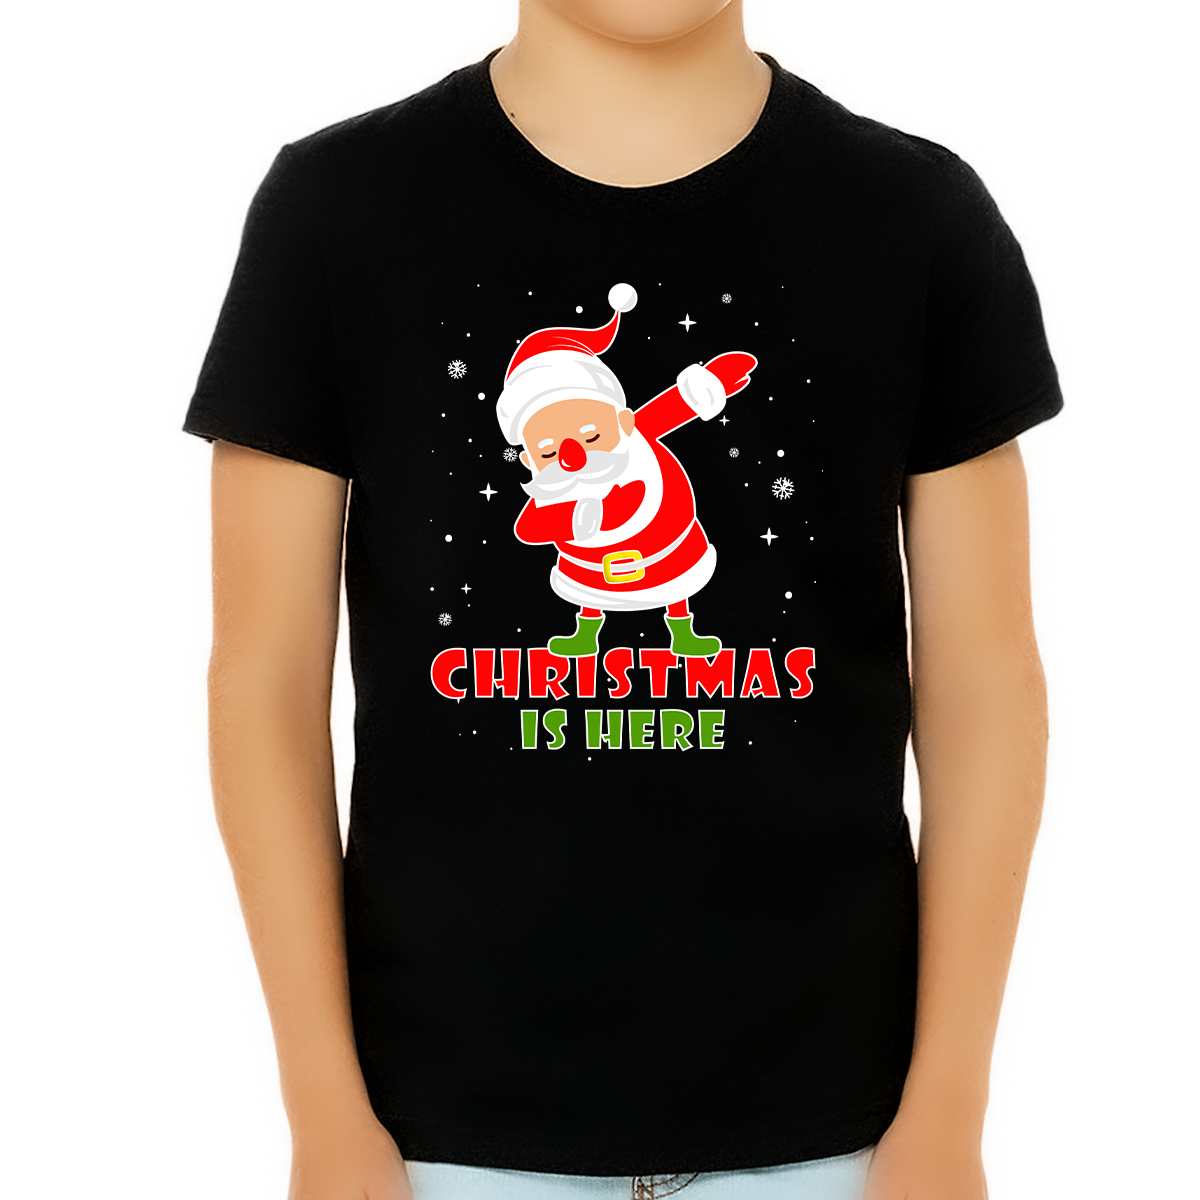 Boys Christmas Shirt Dabbing Santa Claus Christmas Shirts for Boys Christmas Shirts for Kids